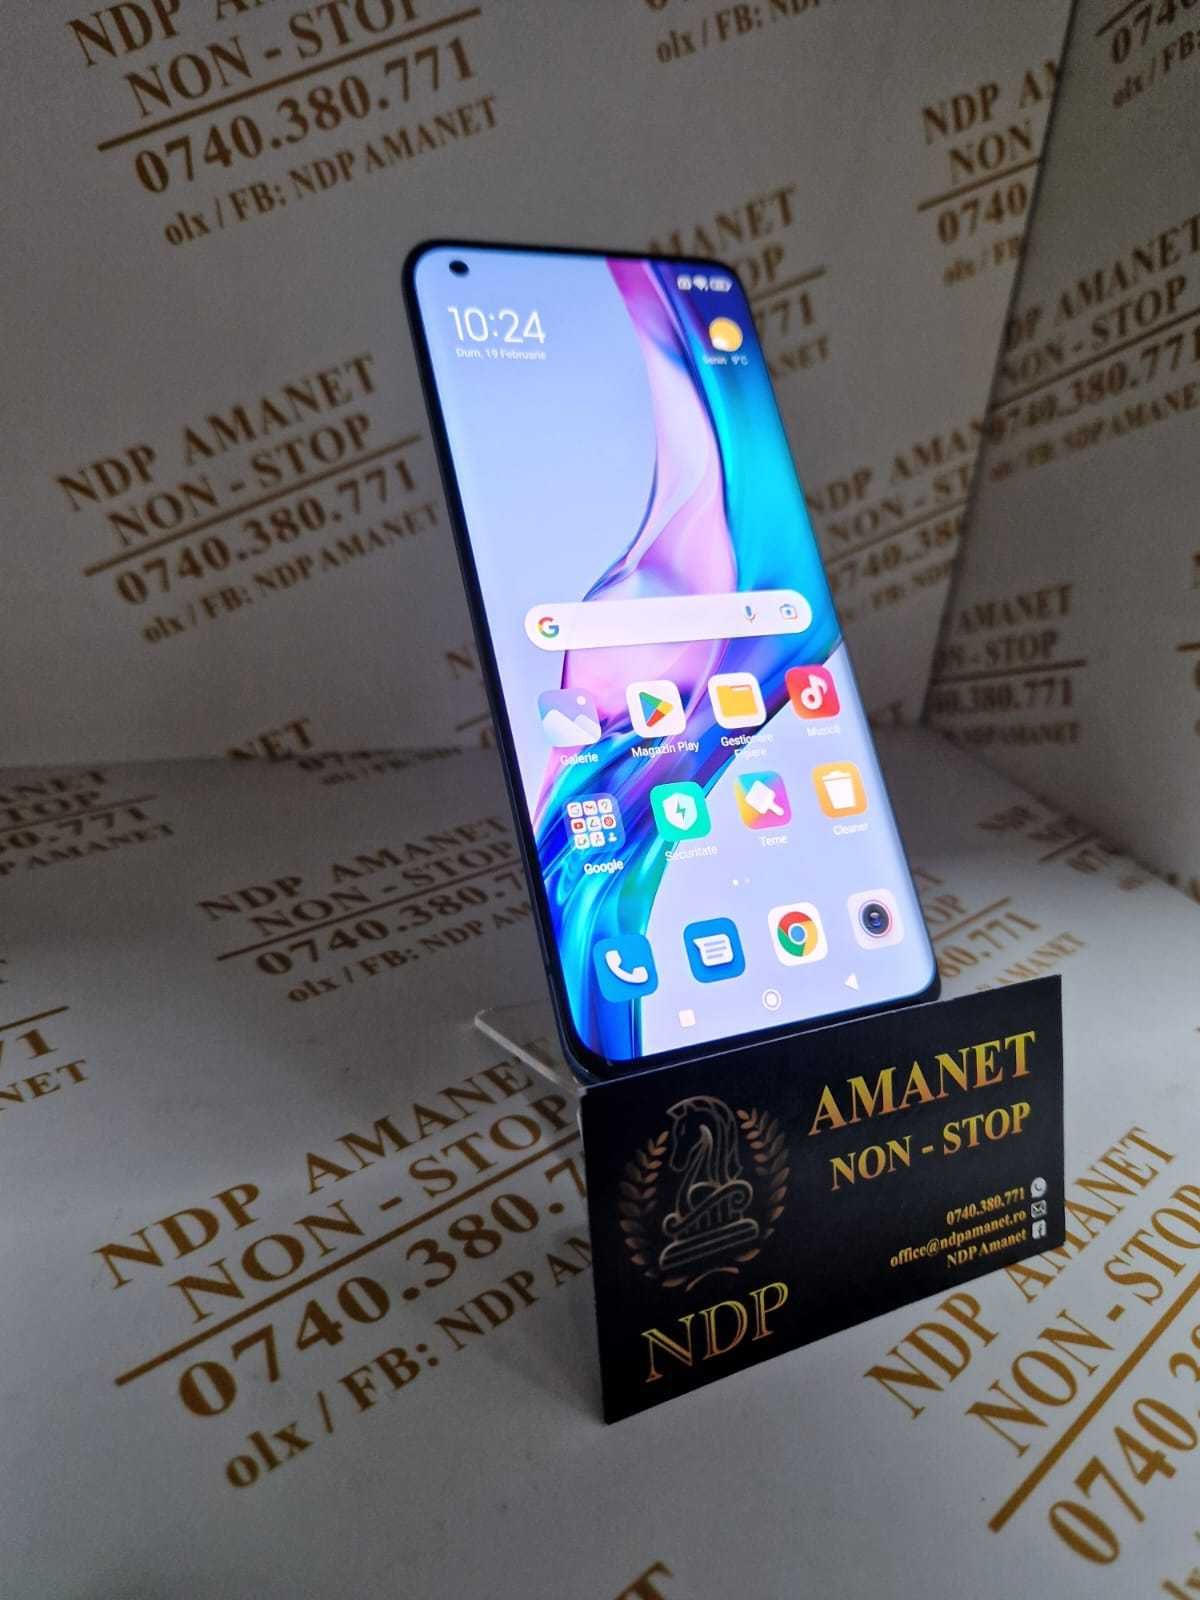 NDP Amanet Calea Mosilor 298 Xiaomi MI 10 5G (7764)